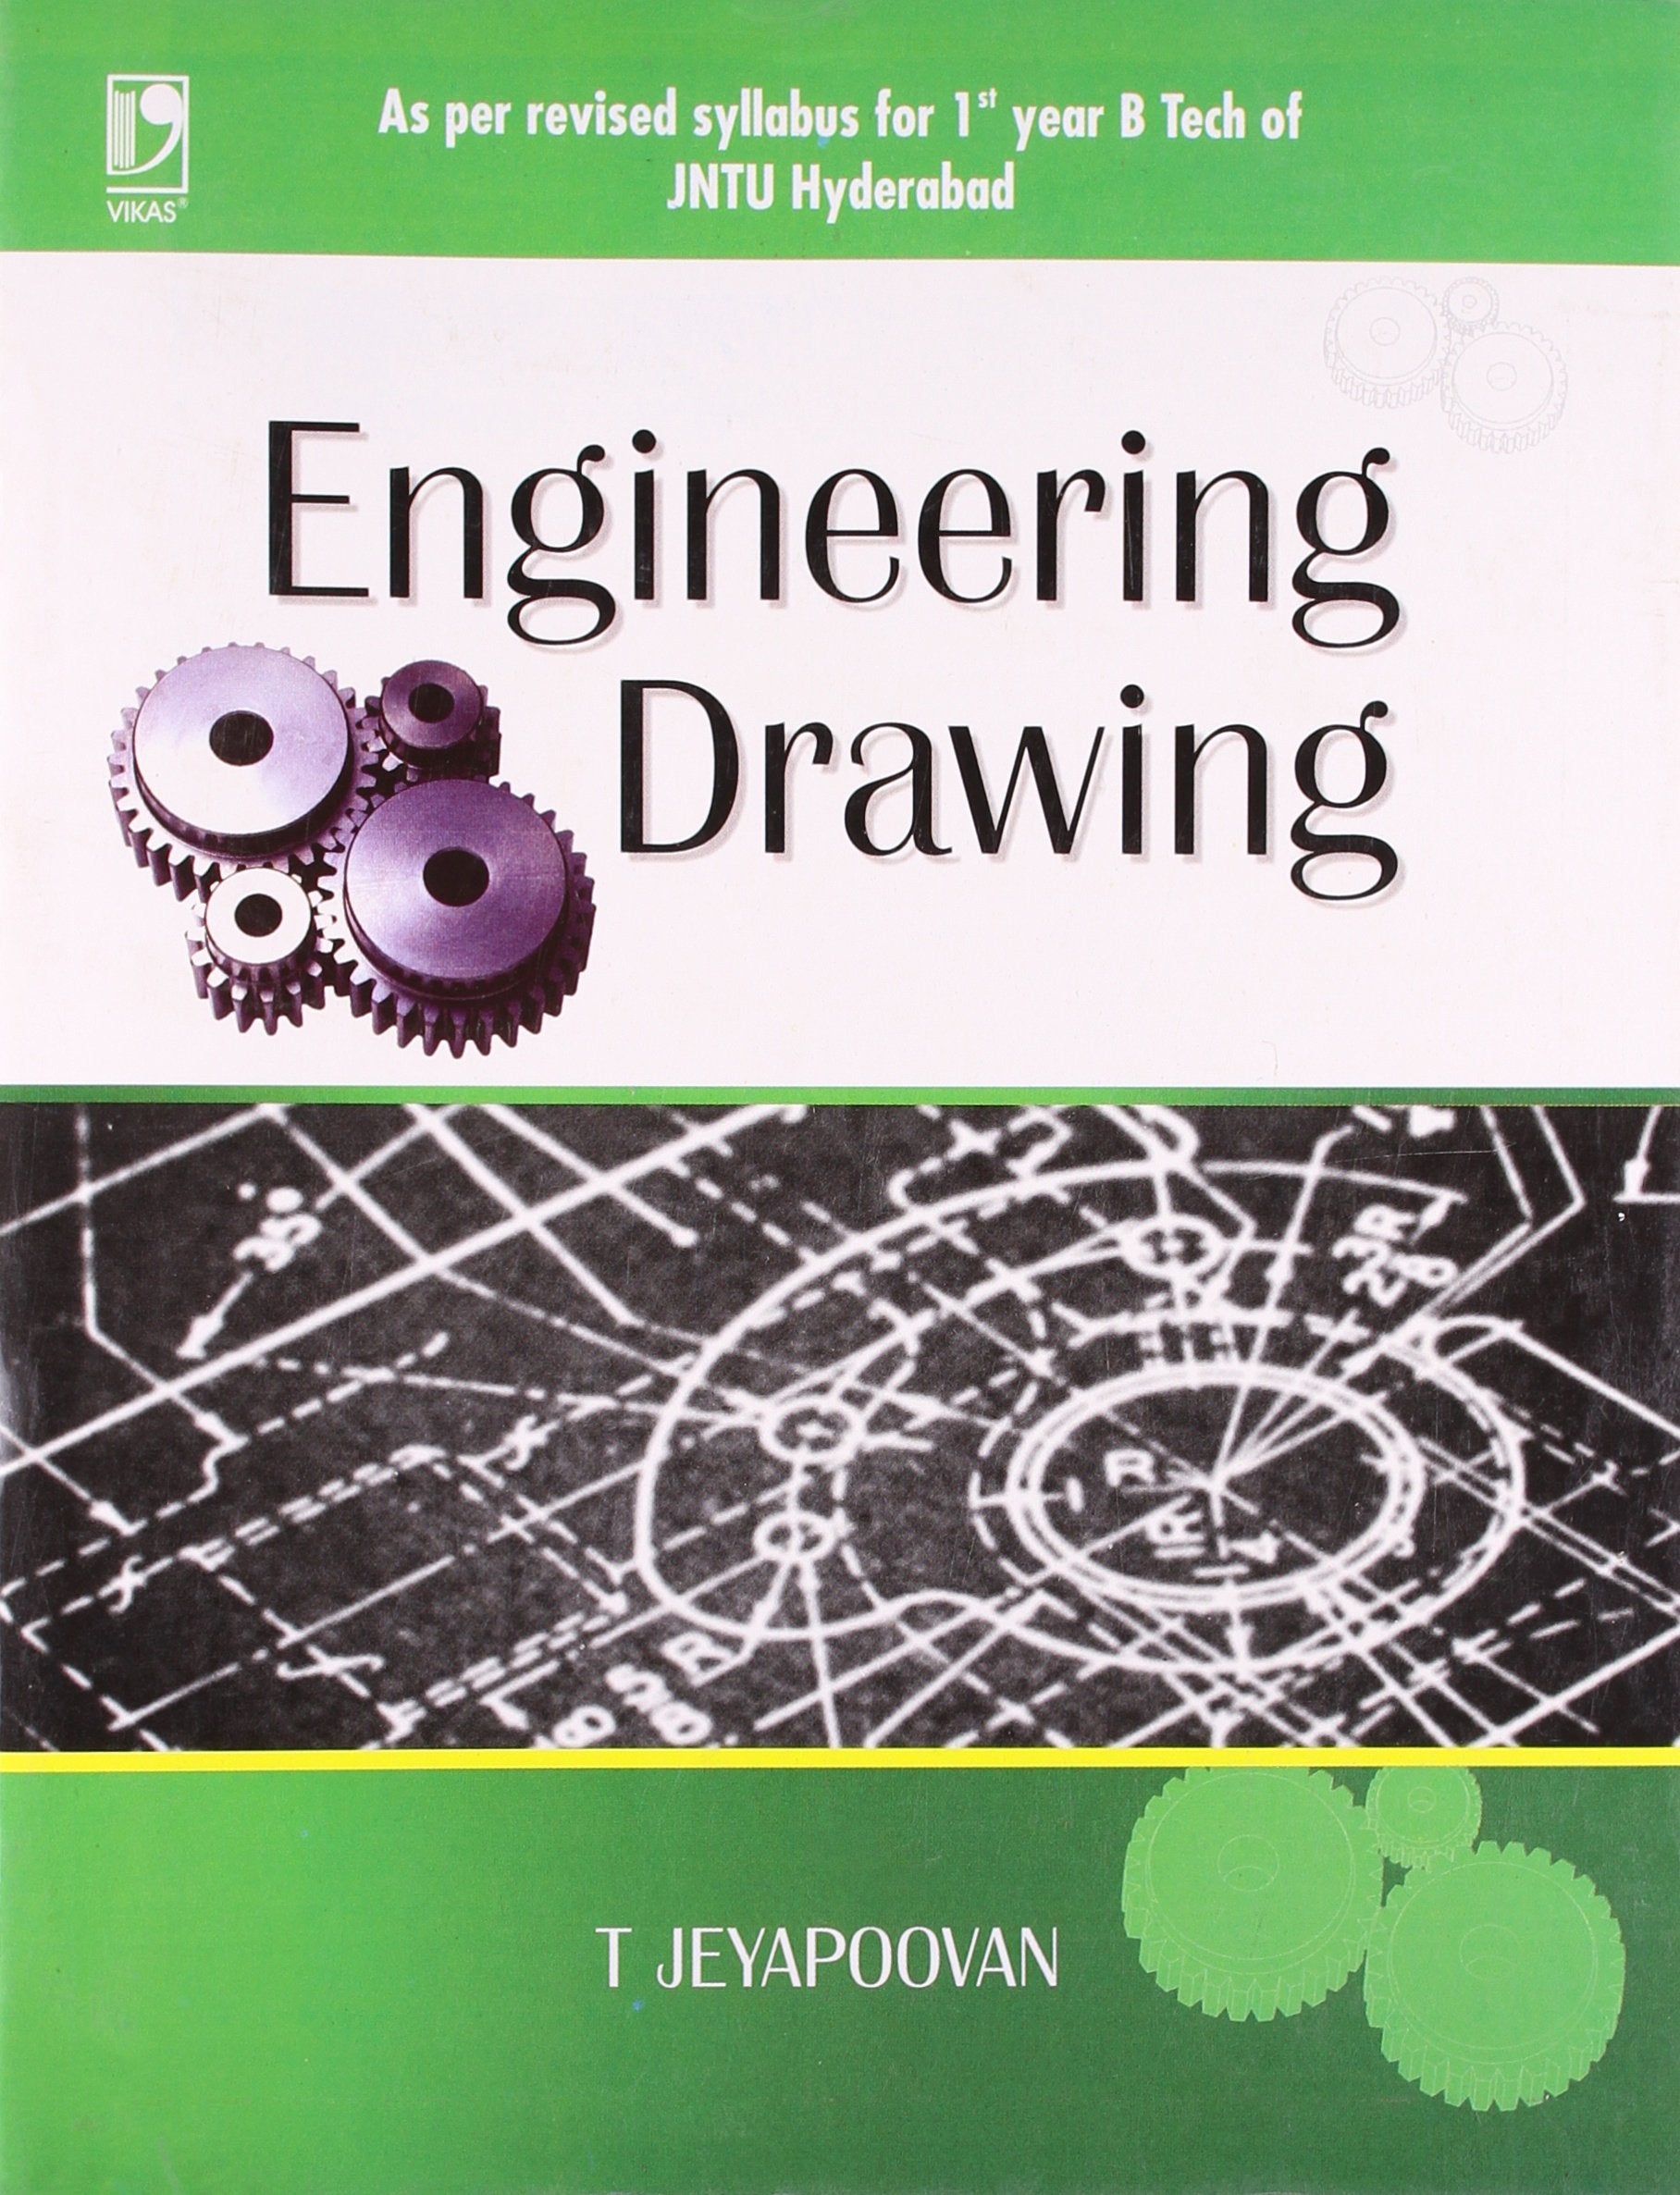 BASIC ELEMENTS OF ENGINEERING DRAWINGS - Newtonian World